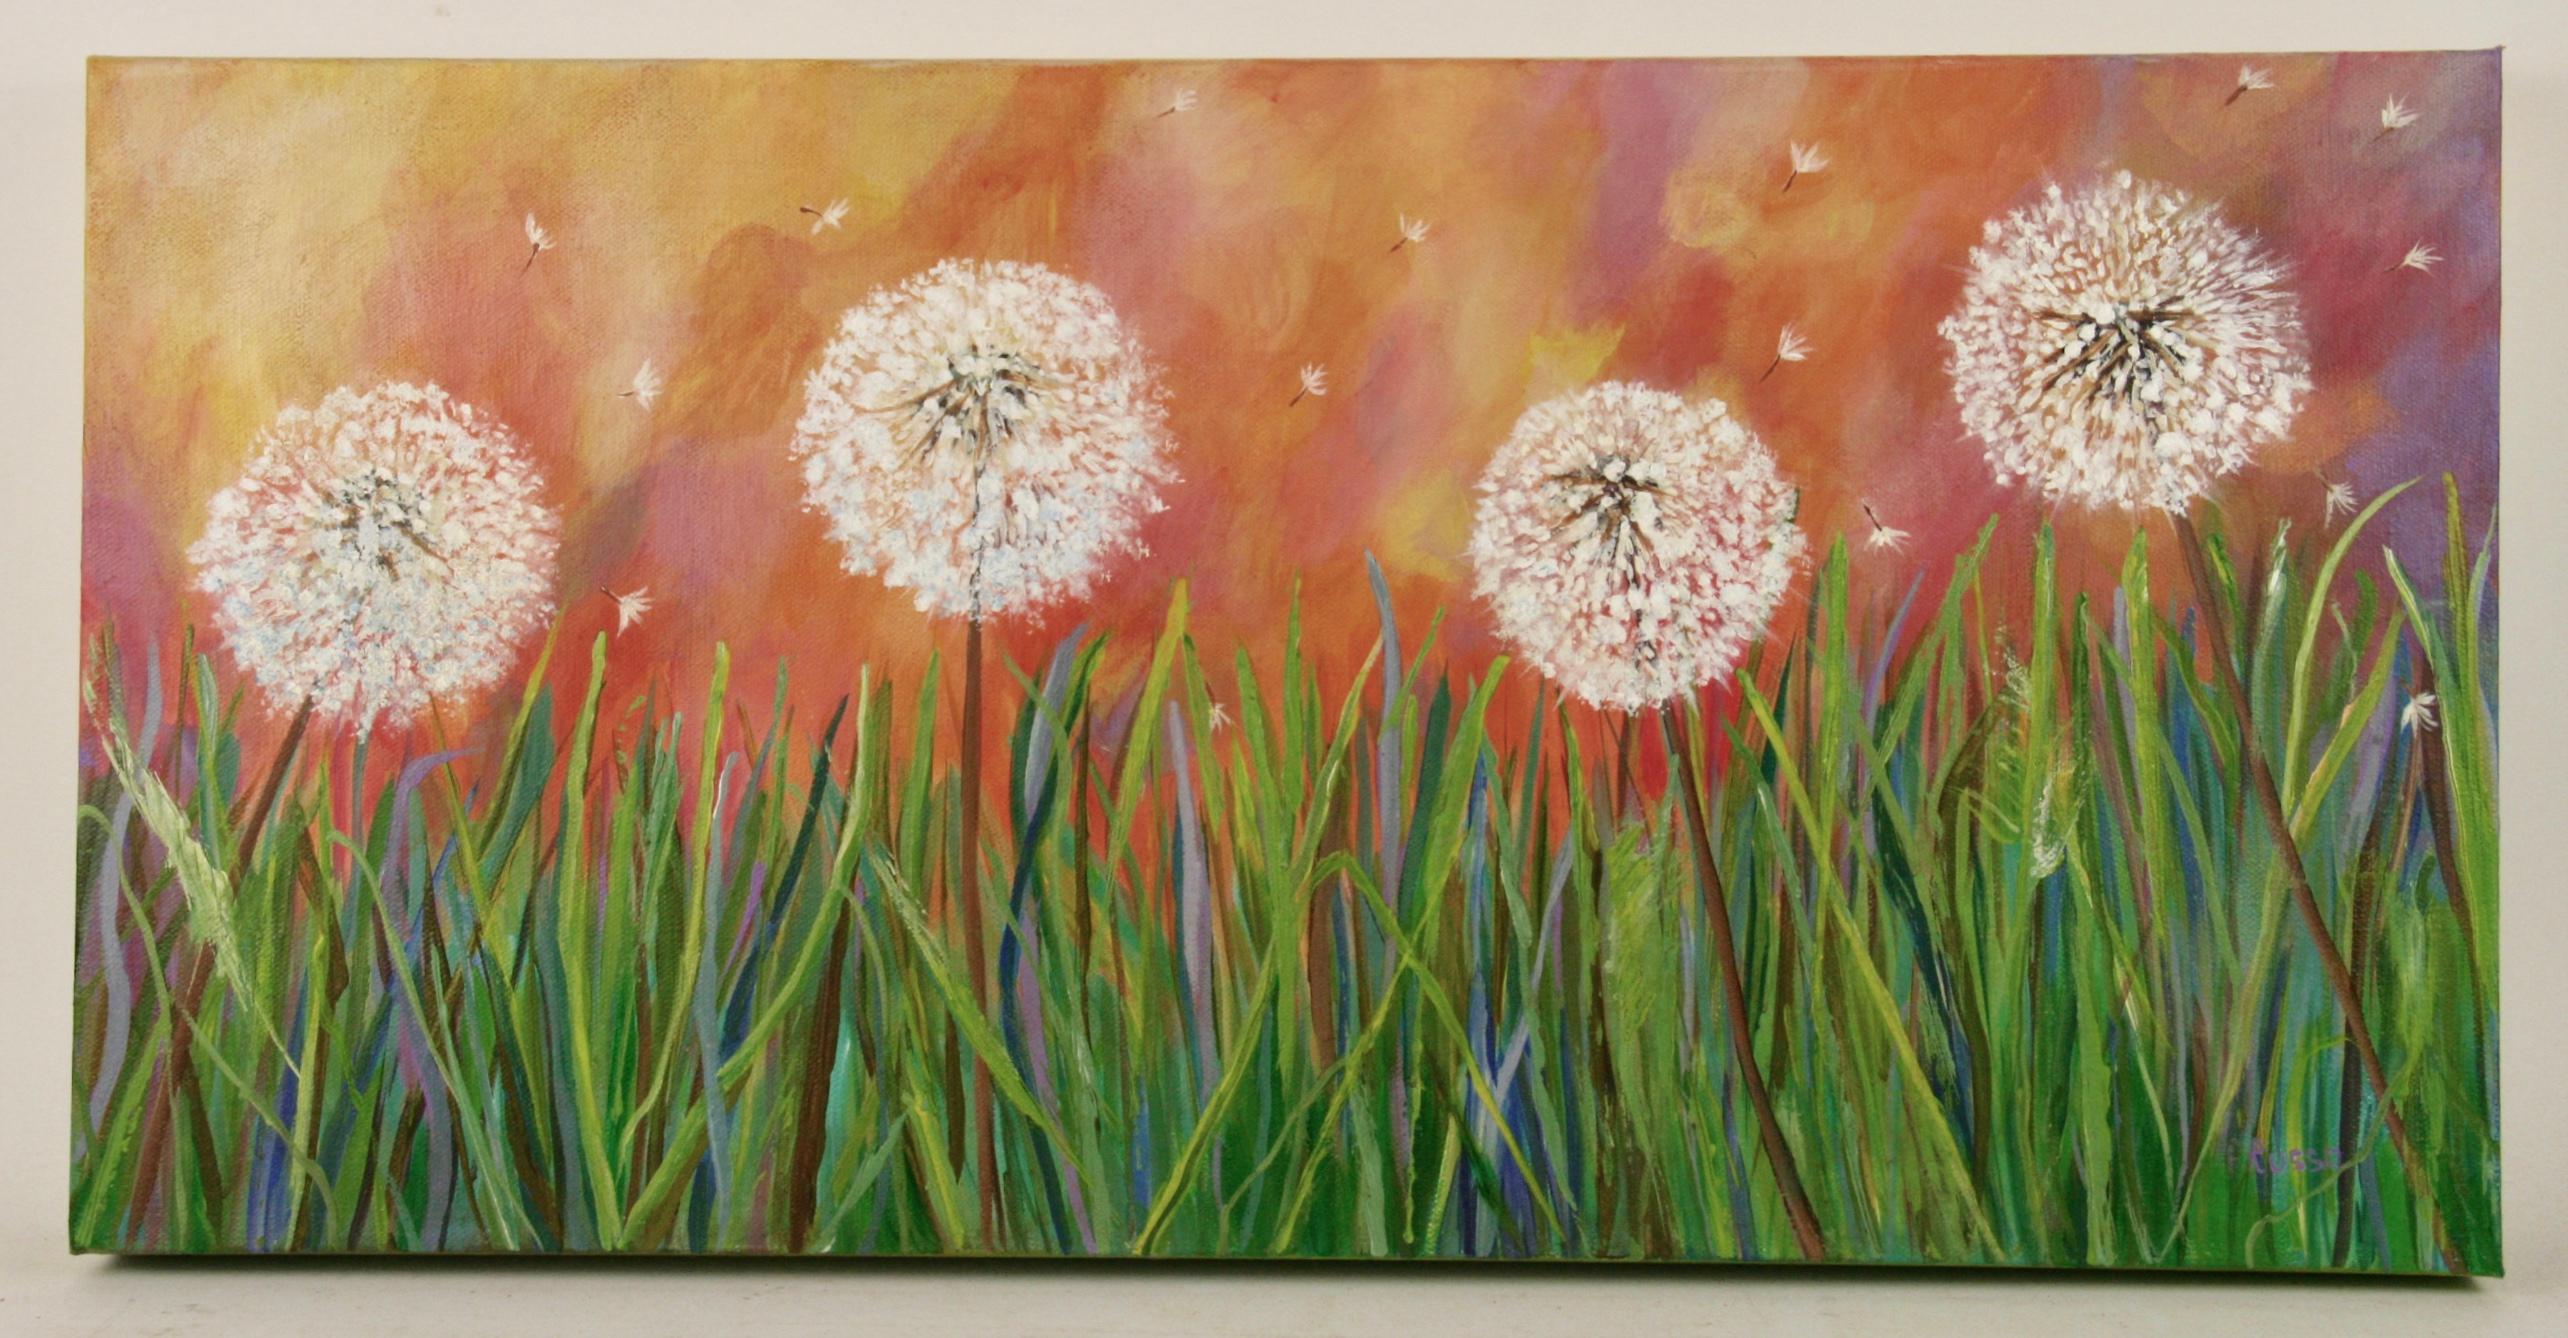  Dandelion Impressionist Landscape  Painting For Sale 8